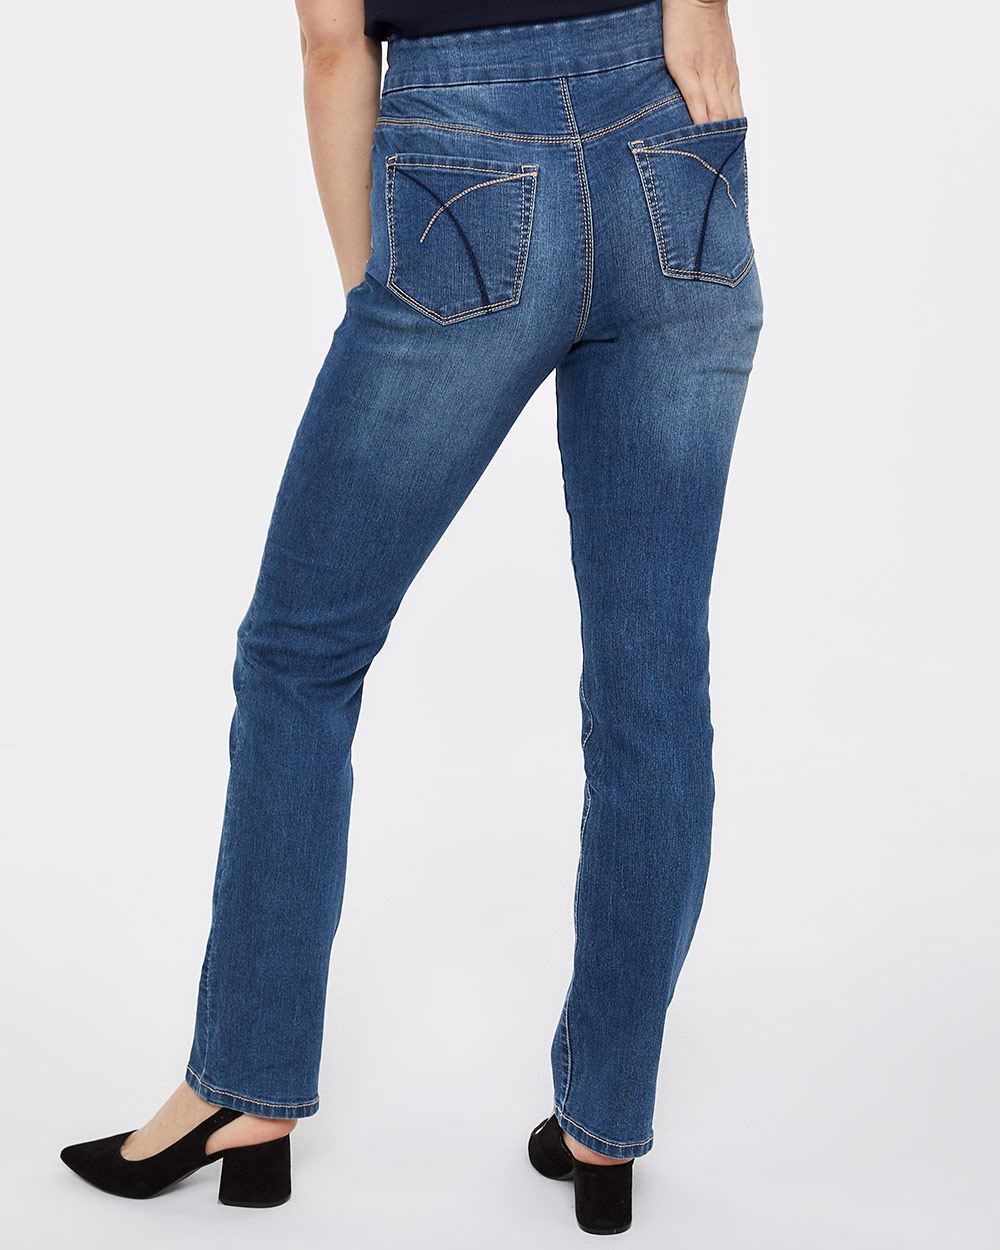 Straight Pull On Jeans The Original Comfort, Regular